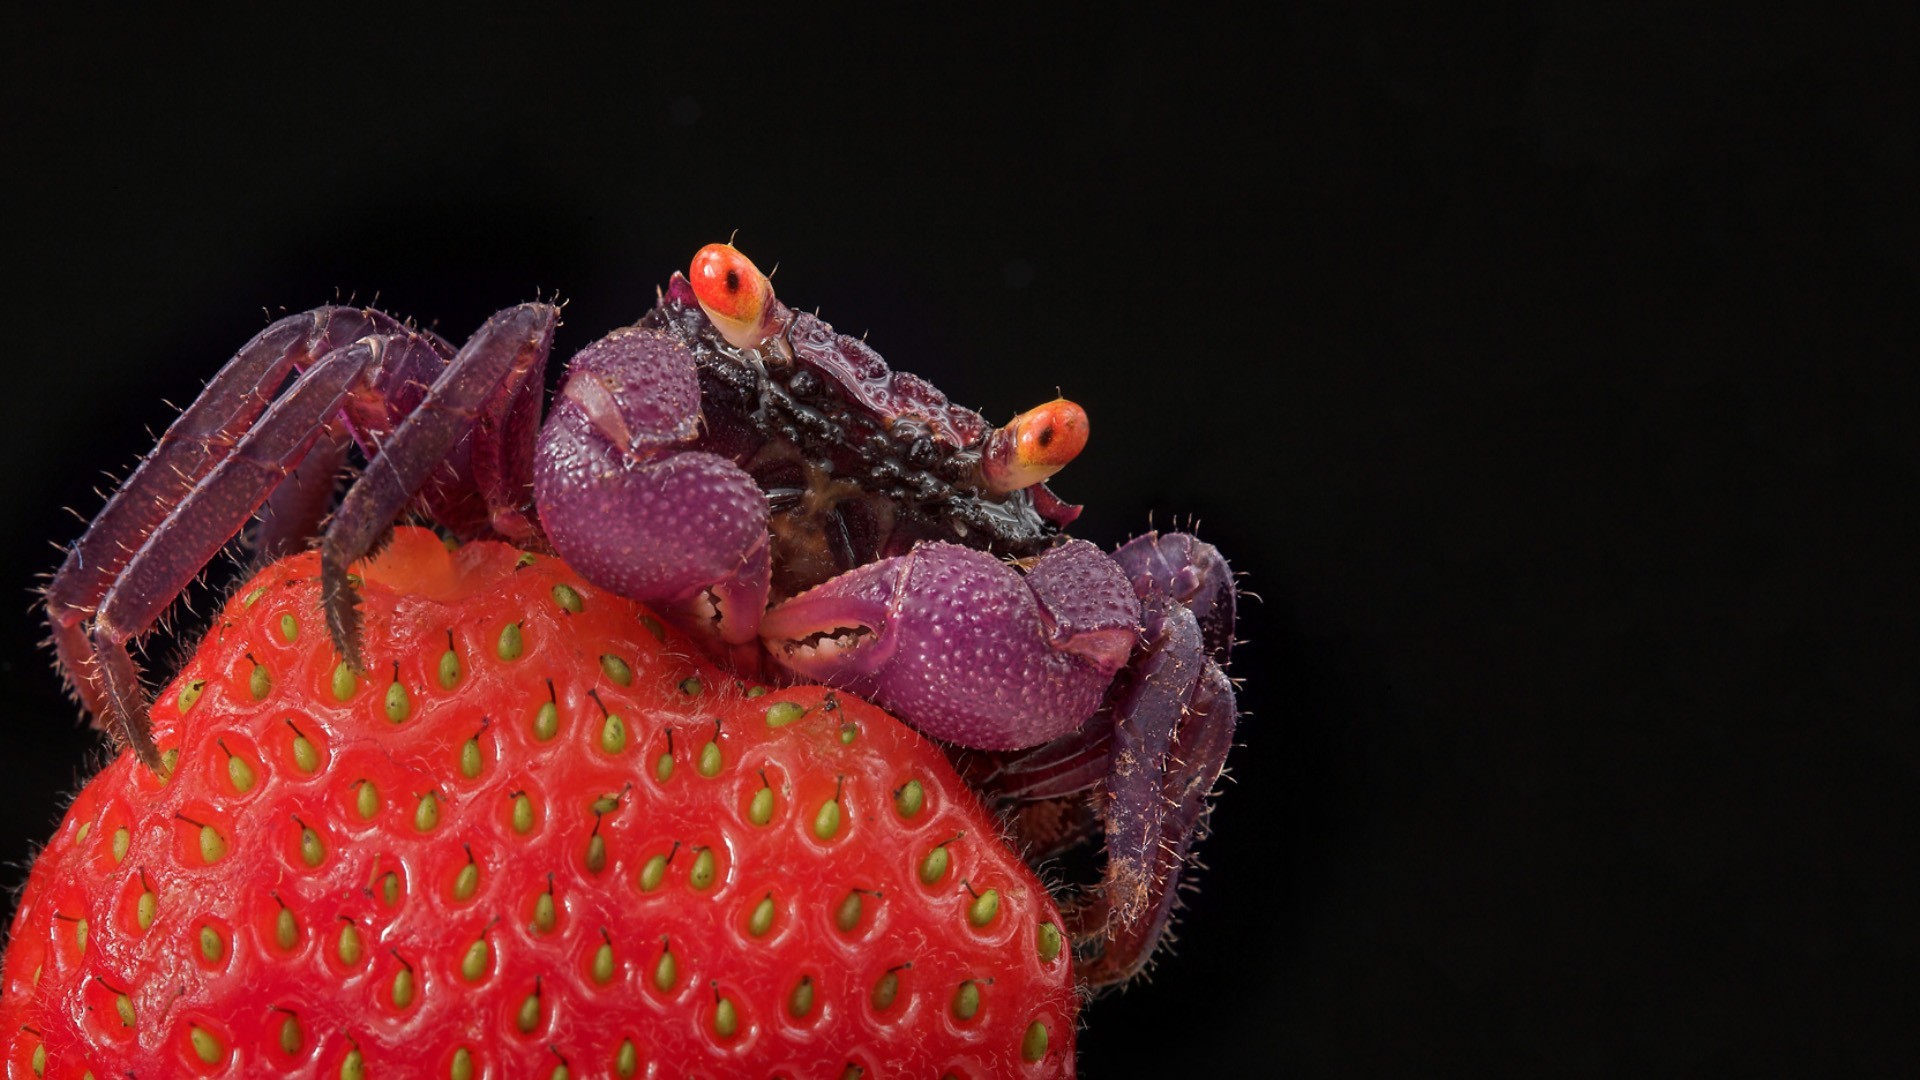 General 1920x1080 crabs strawberries crustaceans fruit animals closeup simple background macro black background